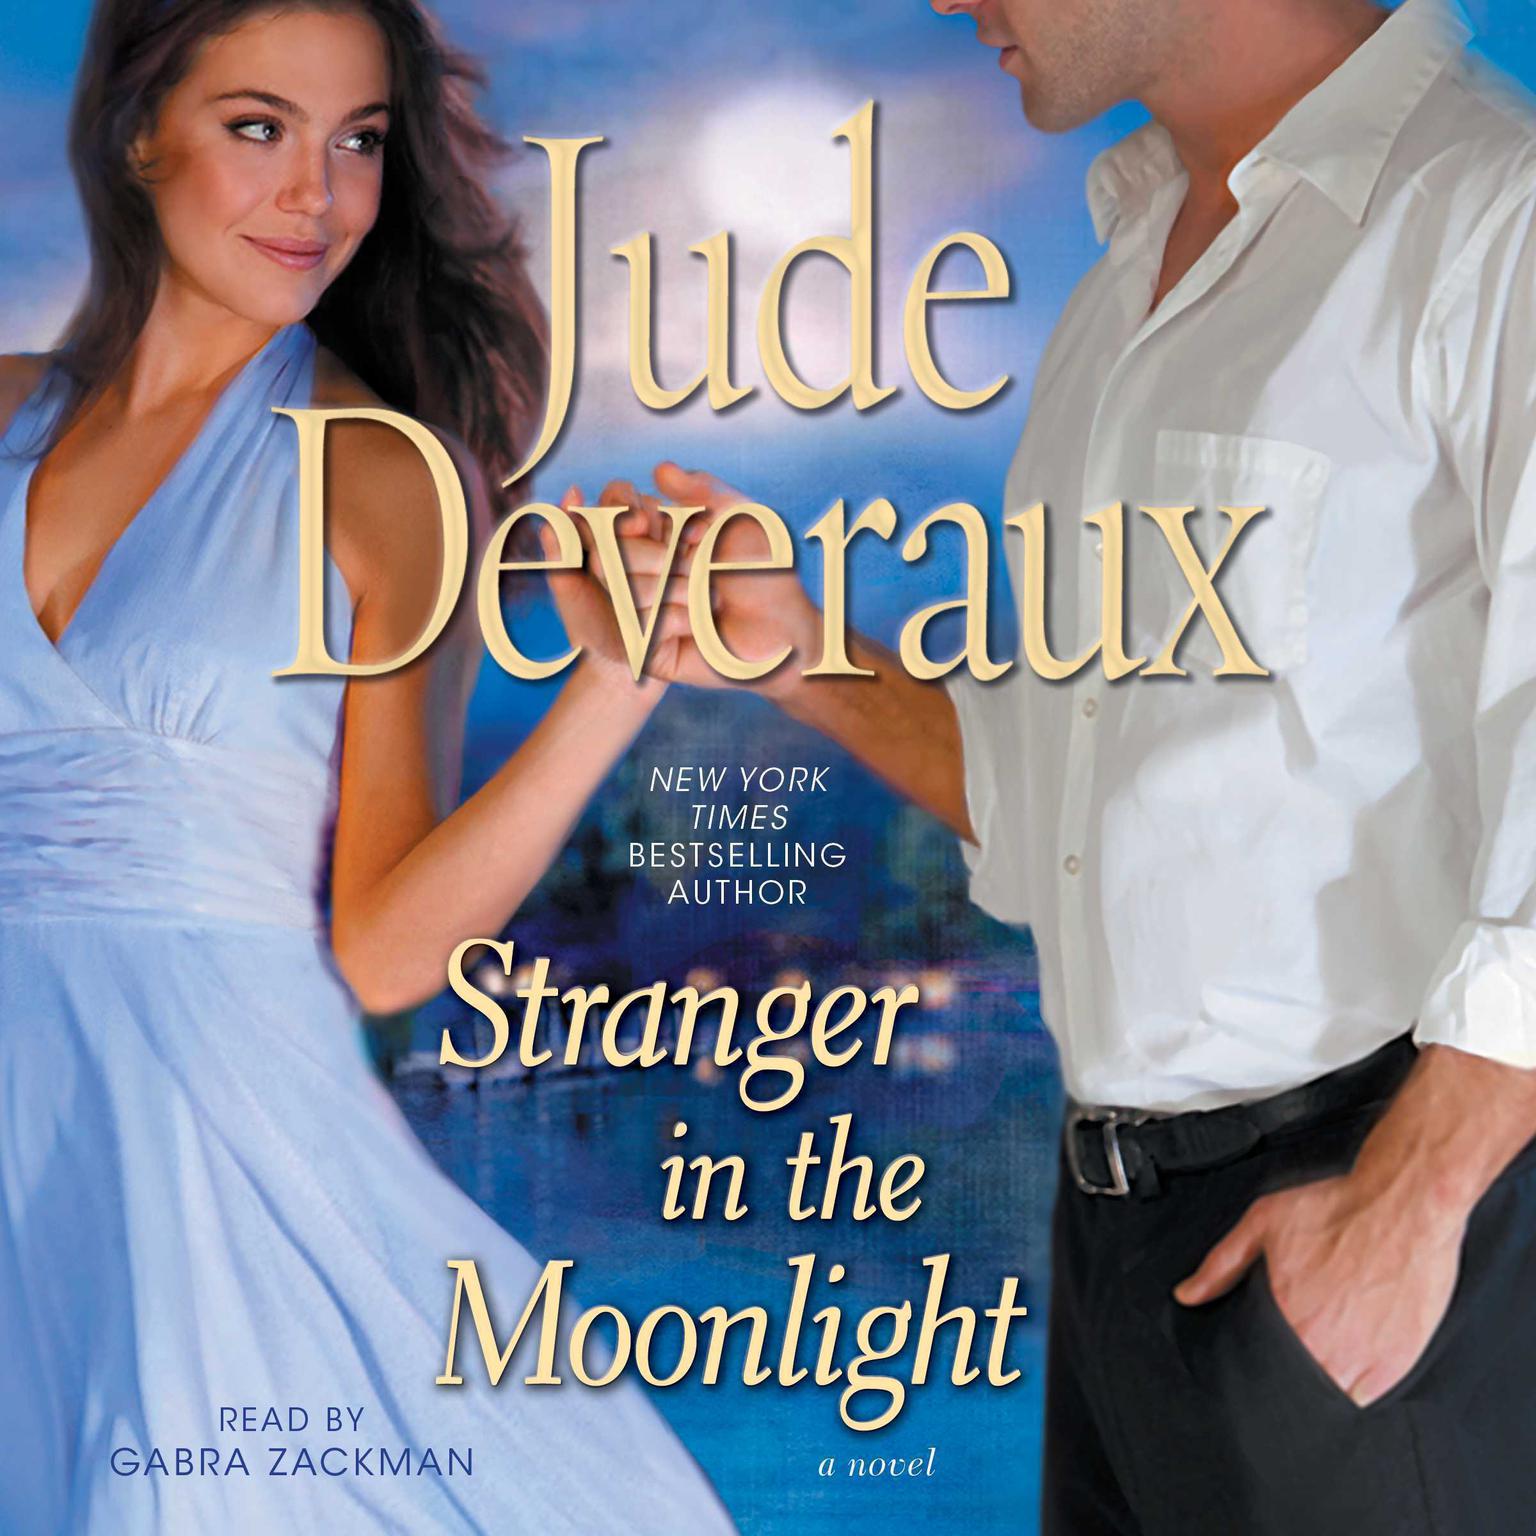 Stranger in the Moonlight Audiobook, by Jude Deveraux